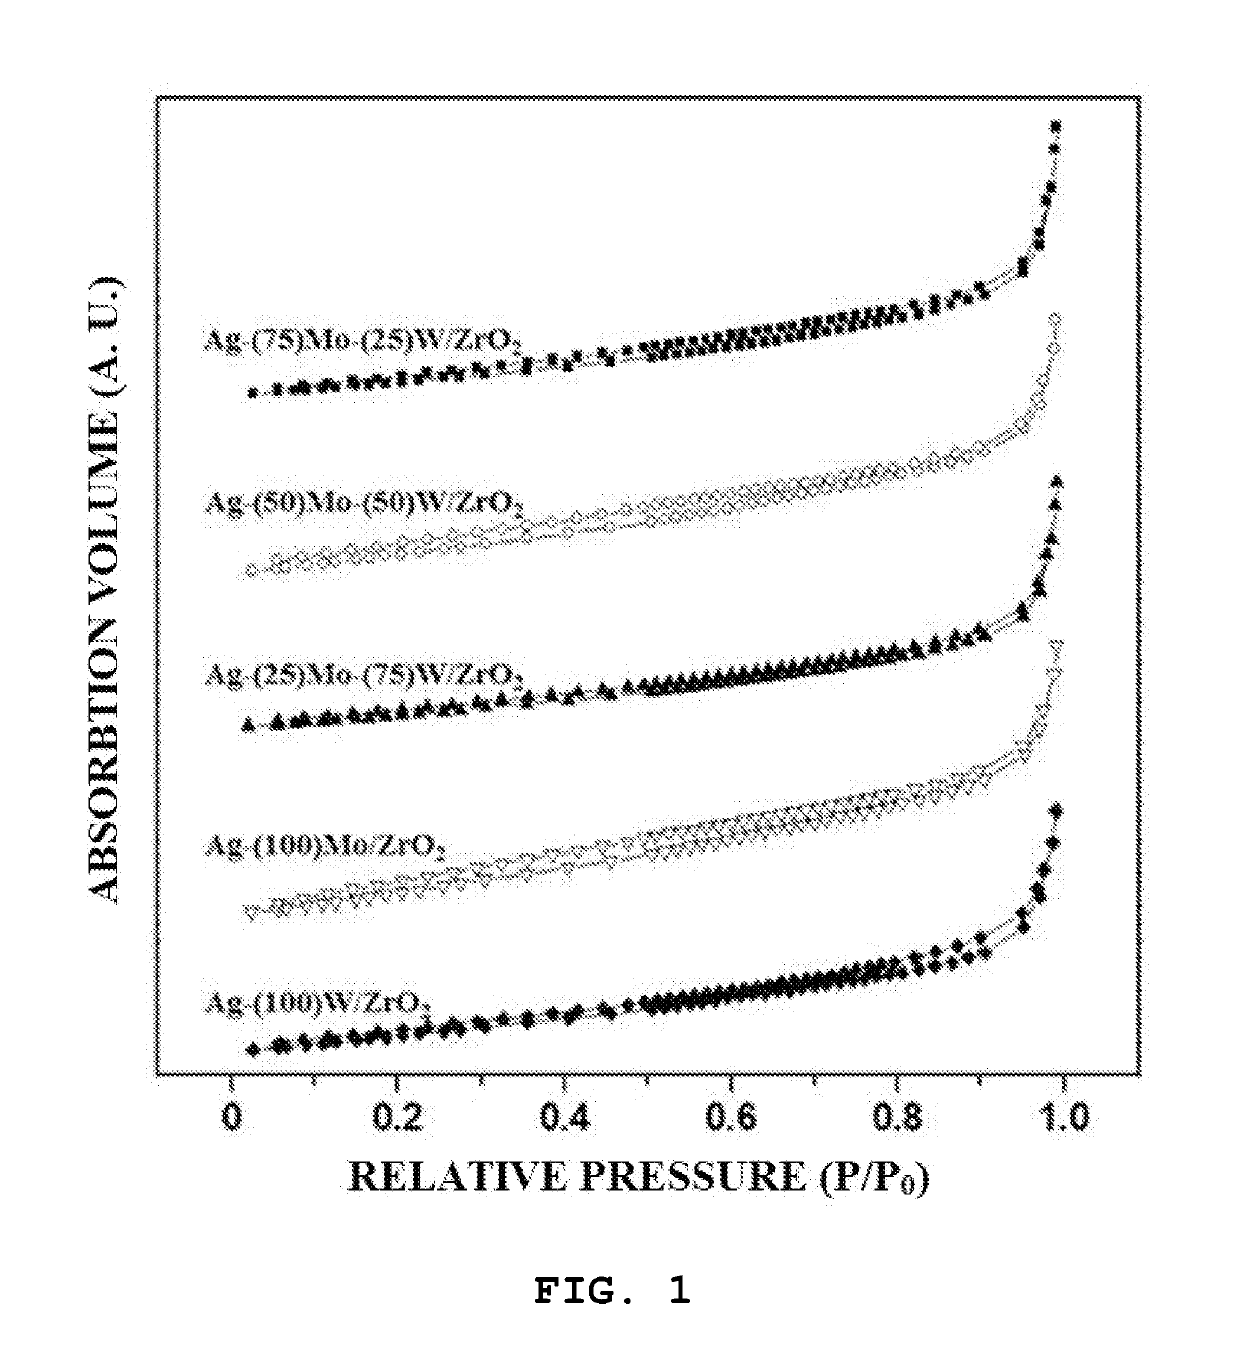 Propylene direct oxidation reaction catalyst, method for preparing same, and method for preparing propylene oxide through propylene direct oxidation reaction using same